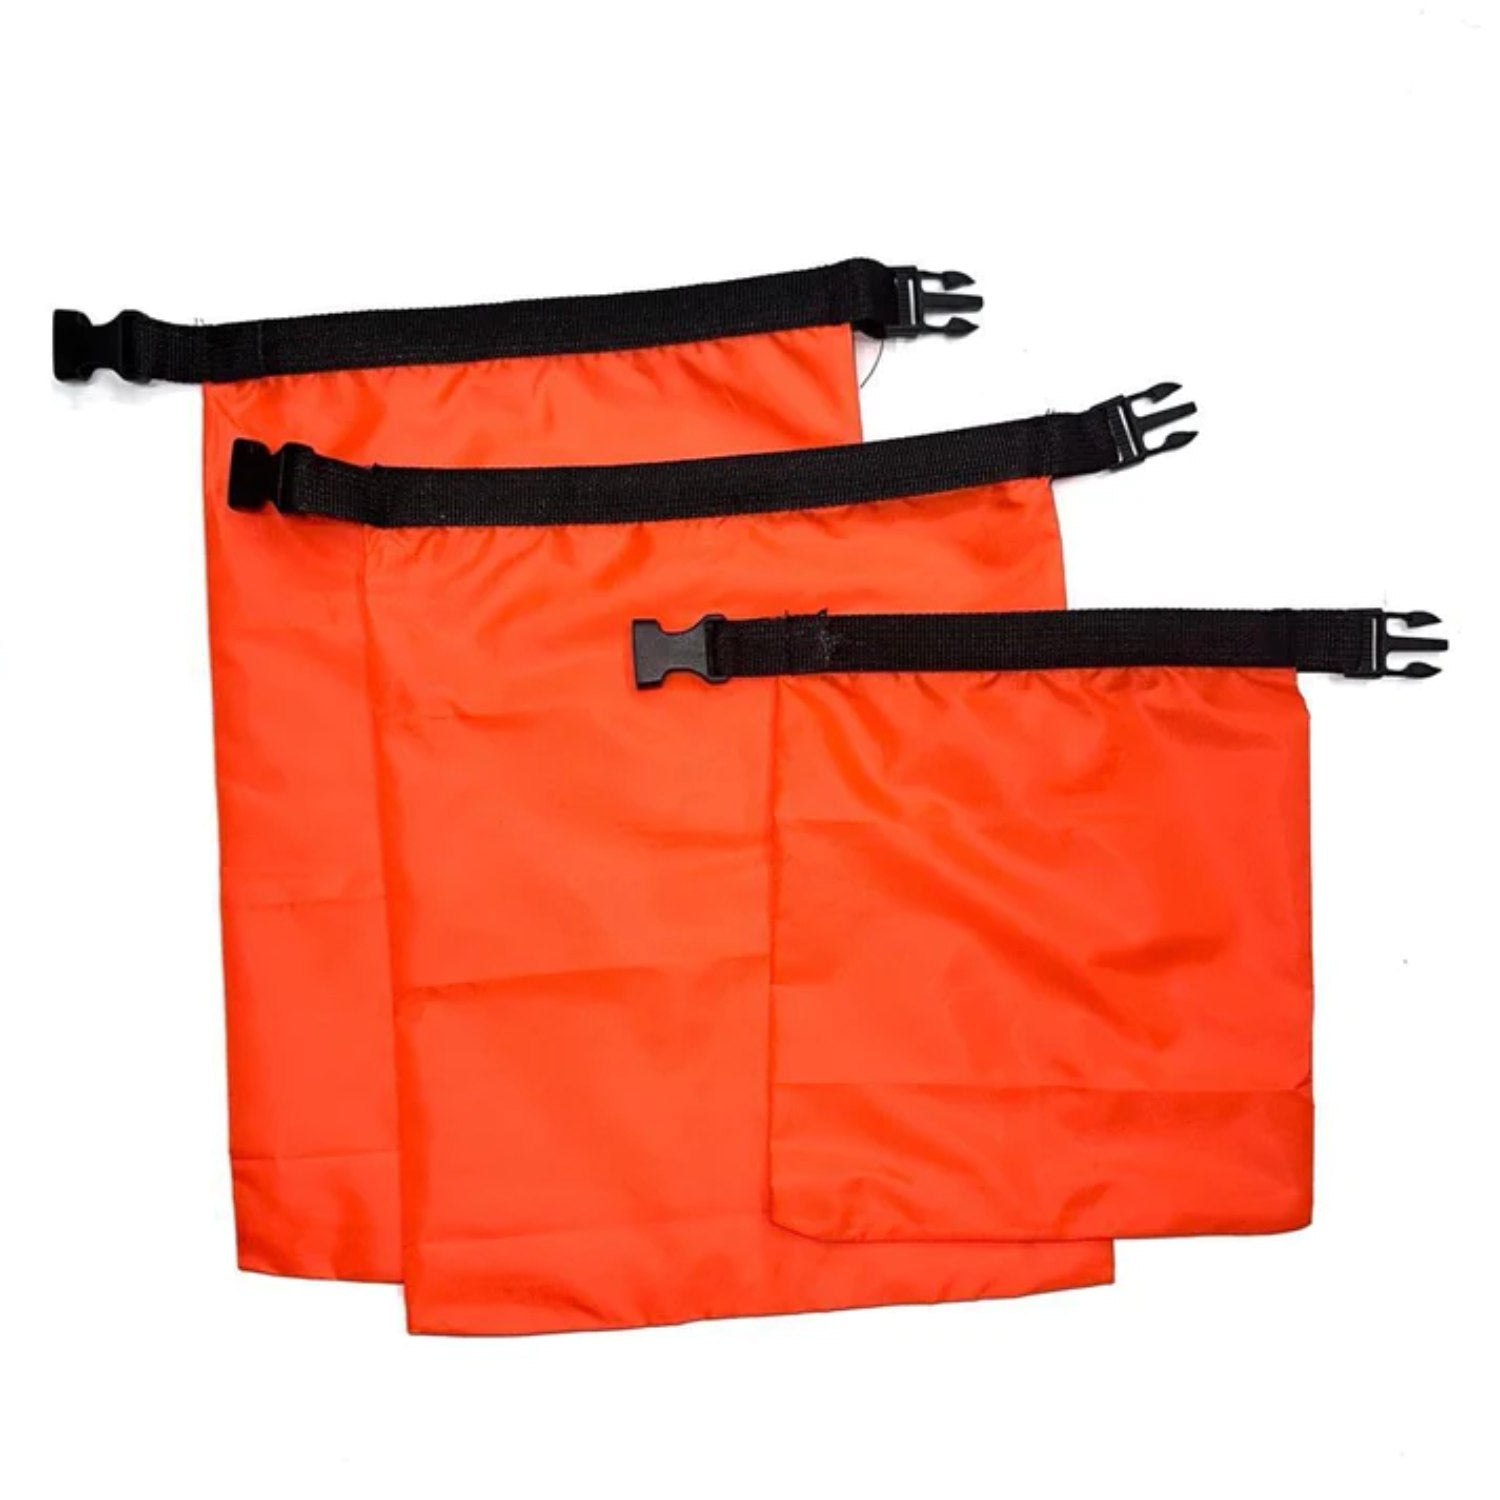 Buy Waterproof Dry Sack Ultralight Set of 3 - (1, 1.5, 2 Ltr) at Gokyo Outdoor Clothing & Gear